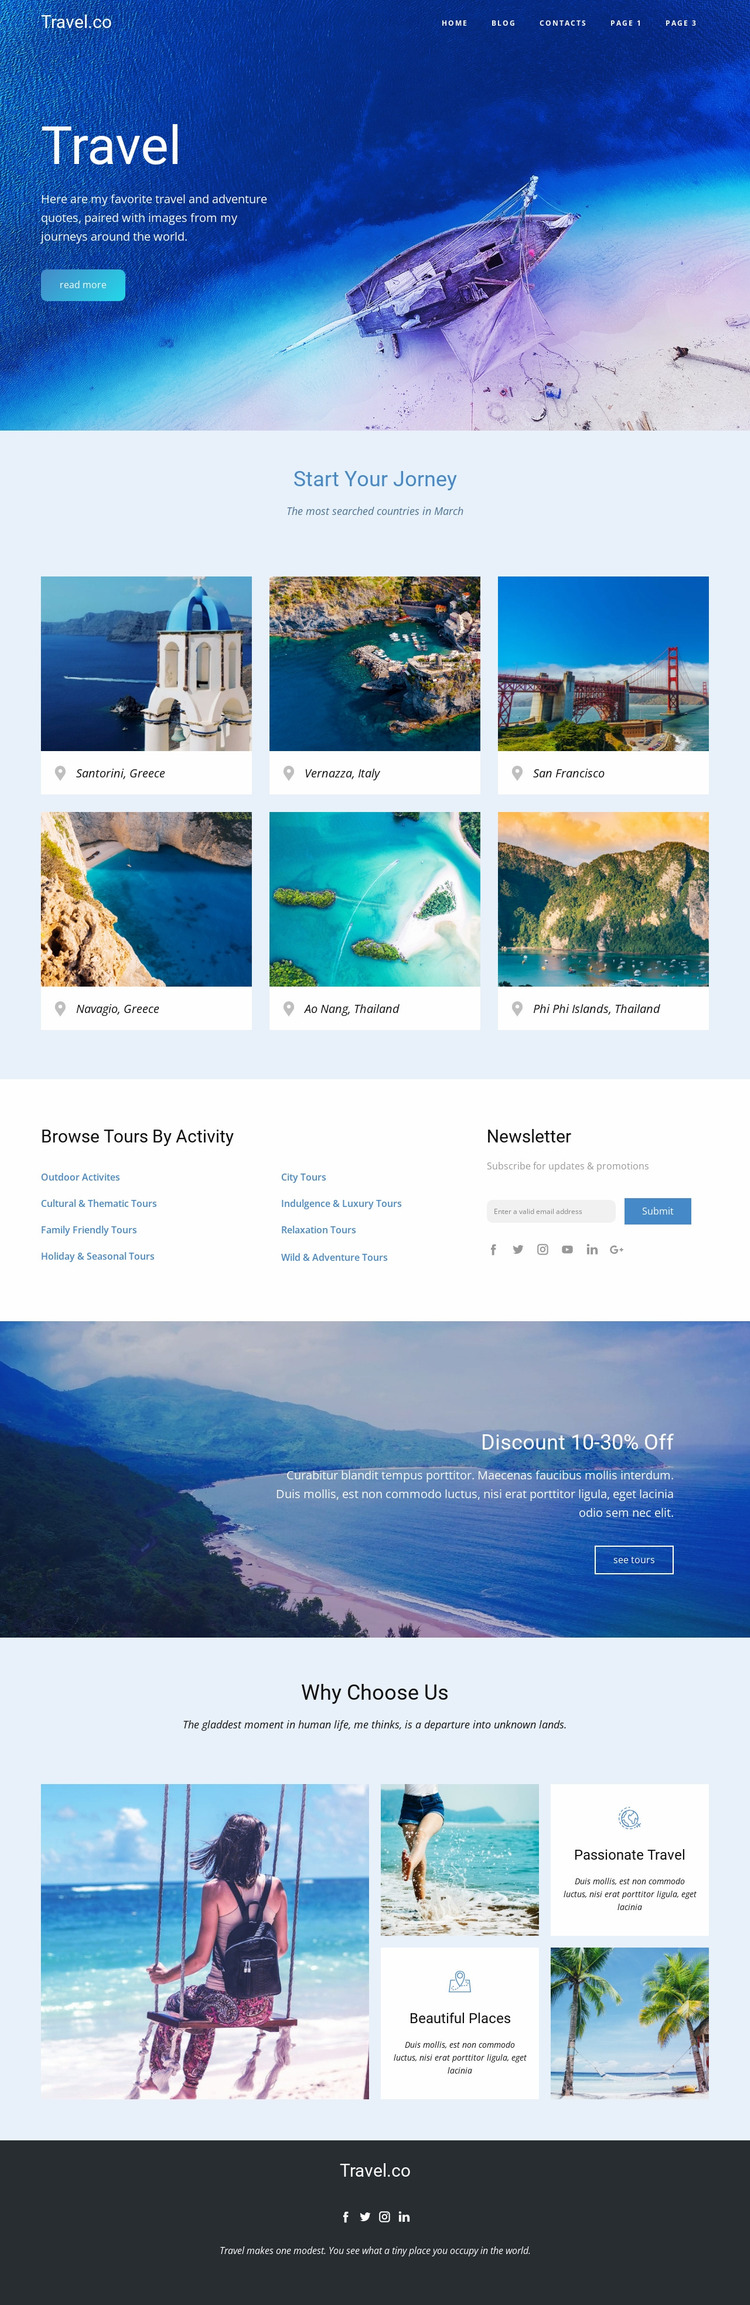 Amazing ideas for travel Website Mockup